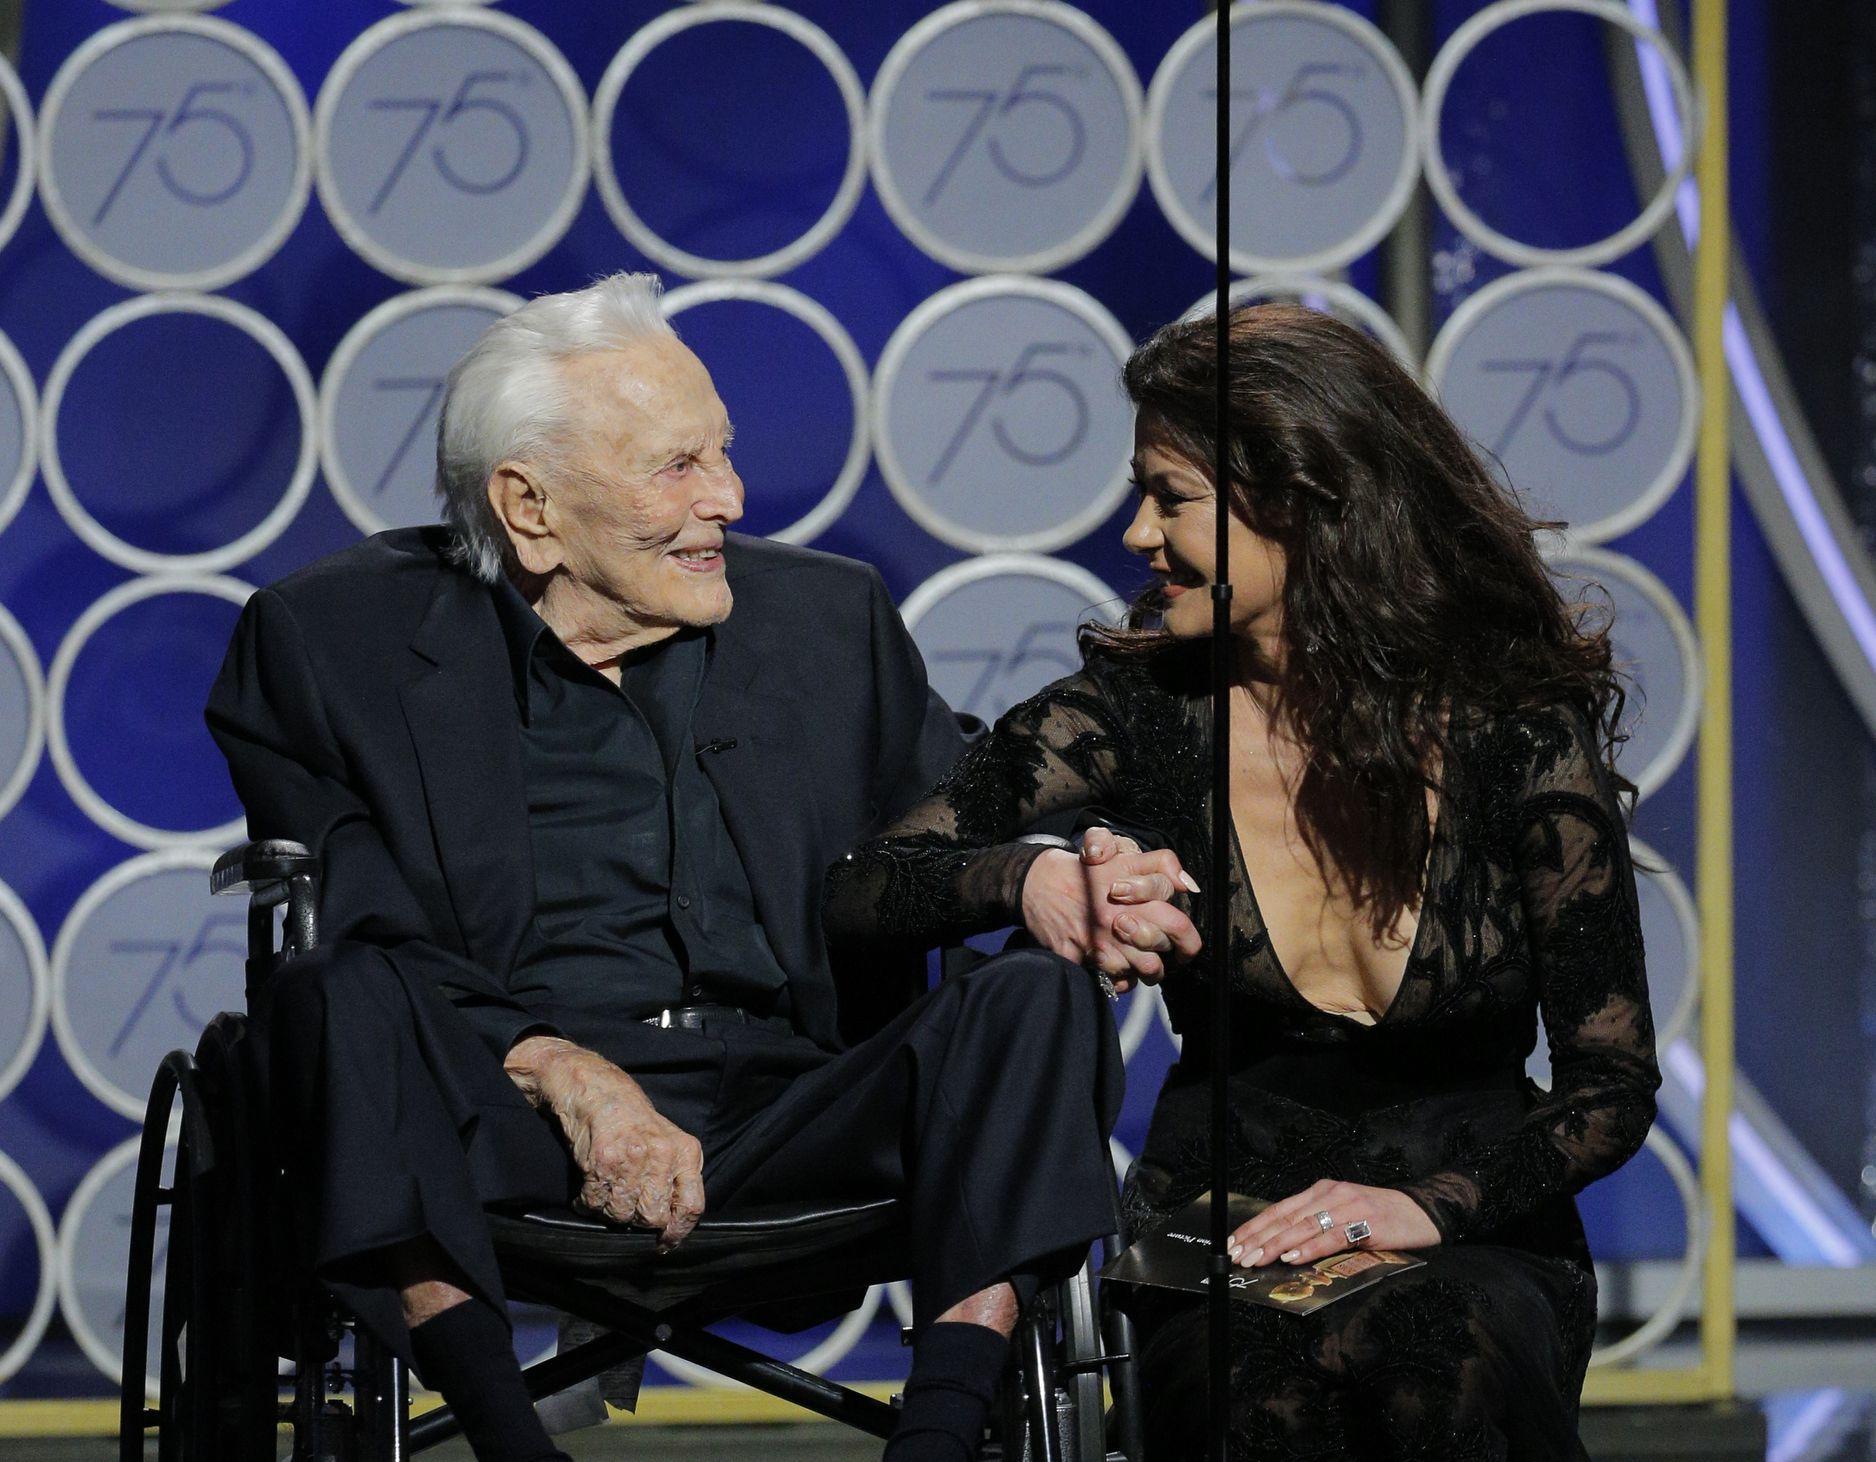 Kirk Douglas, 101, gets standing ovation at Golden Globes | The Independent